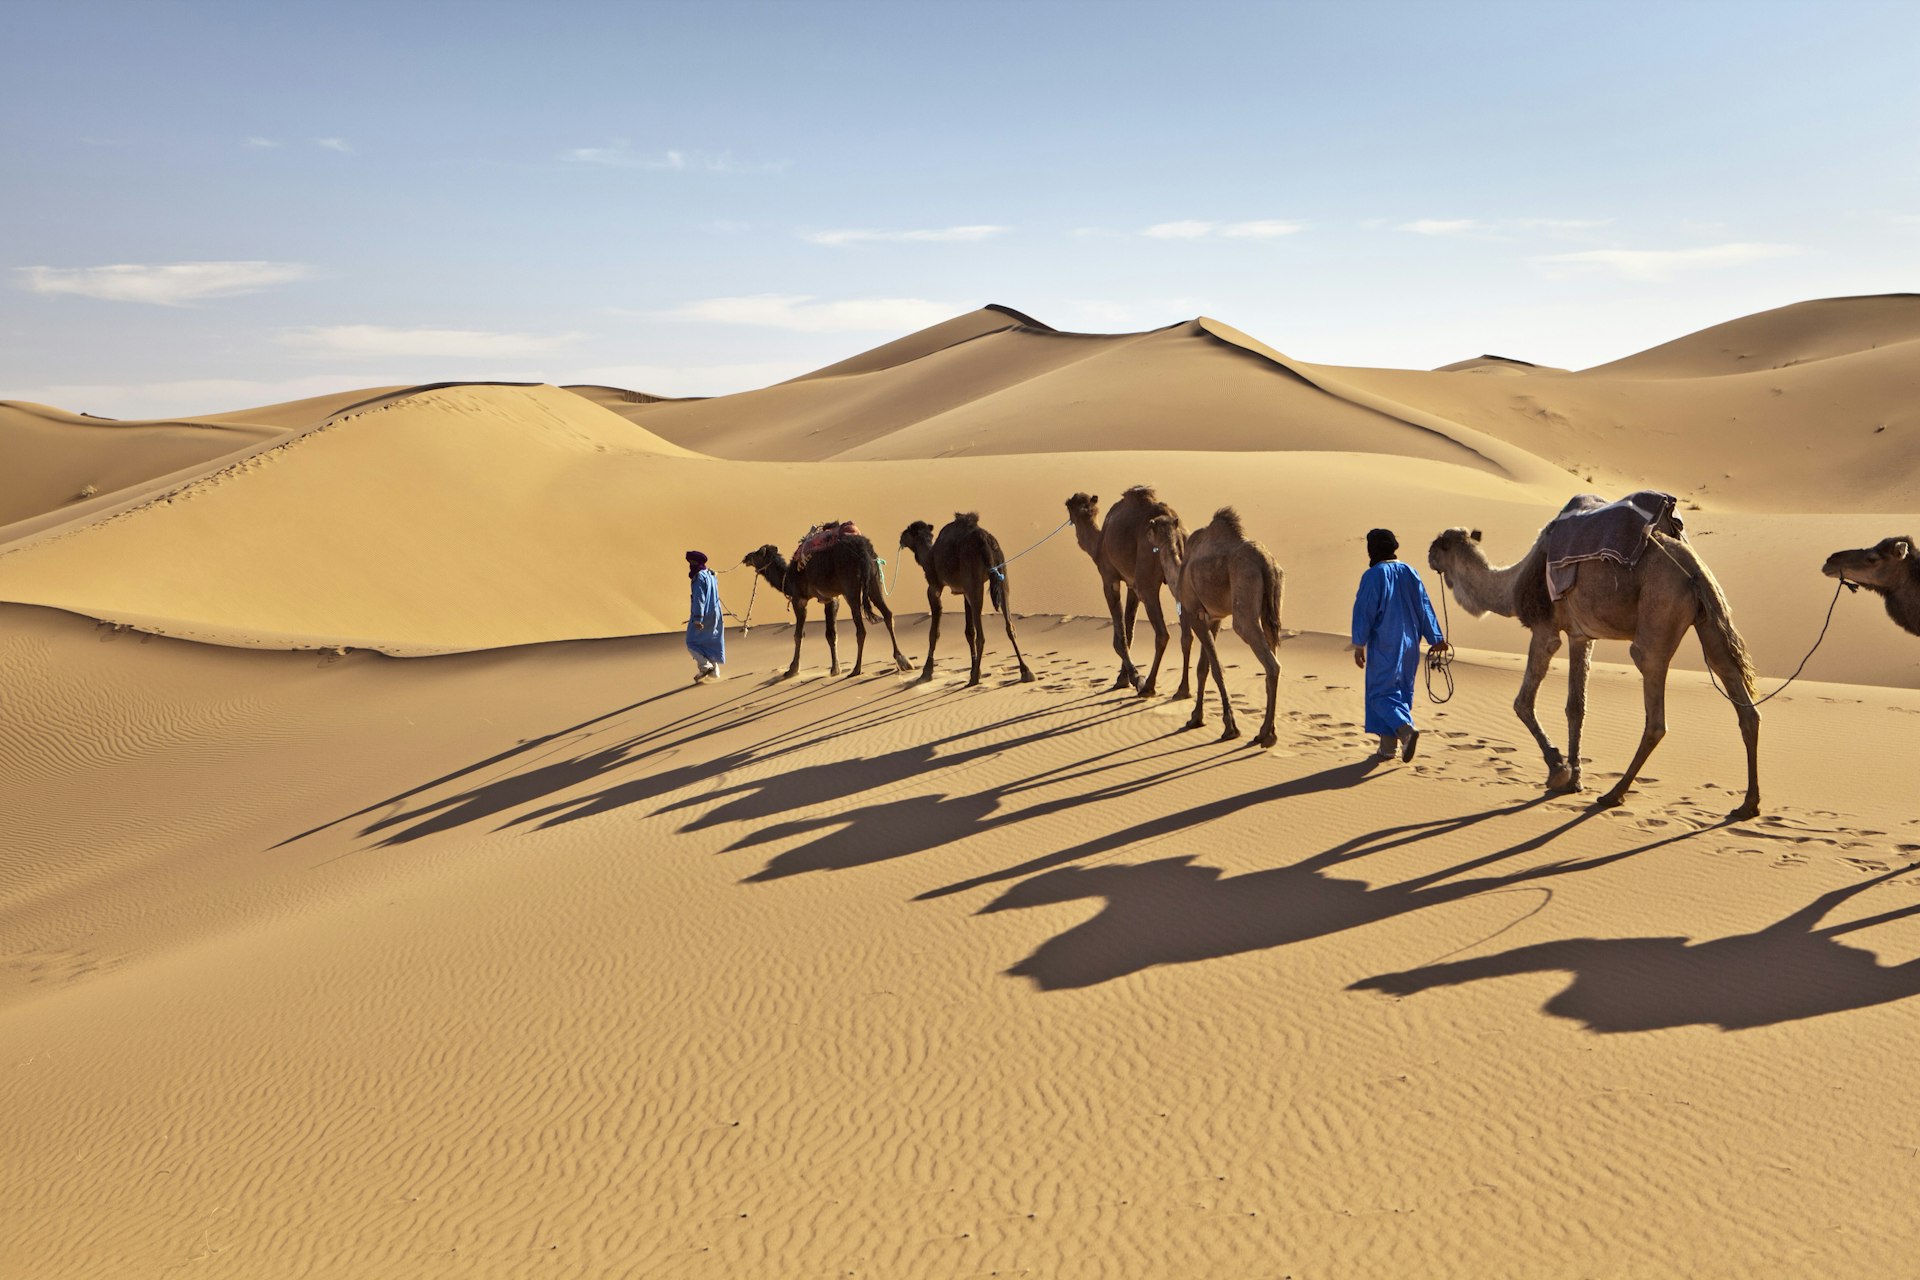 Camel caravan in Erg Chigaga sand dunes, Morocco